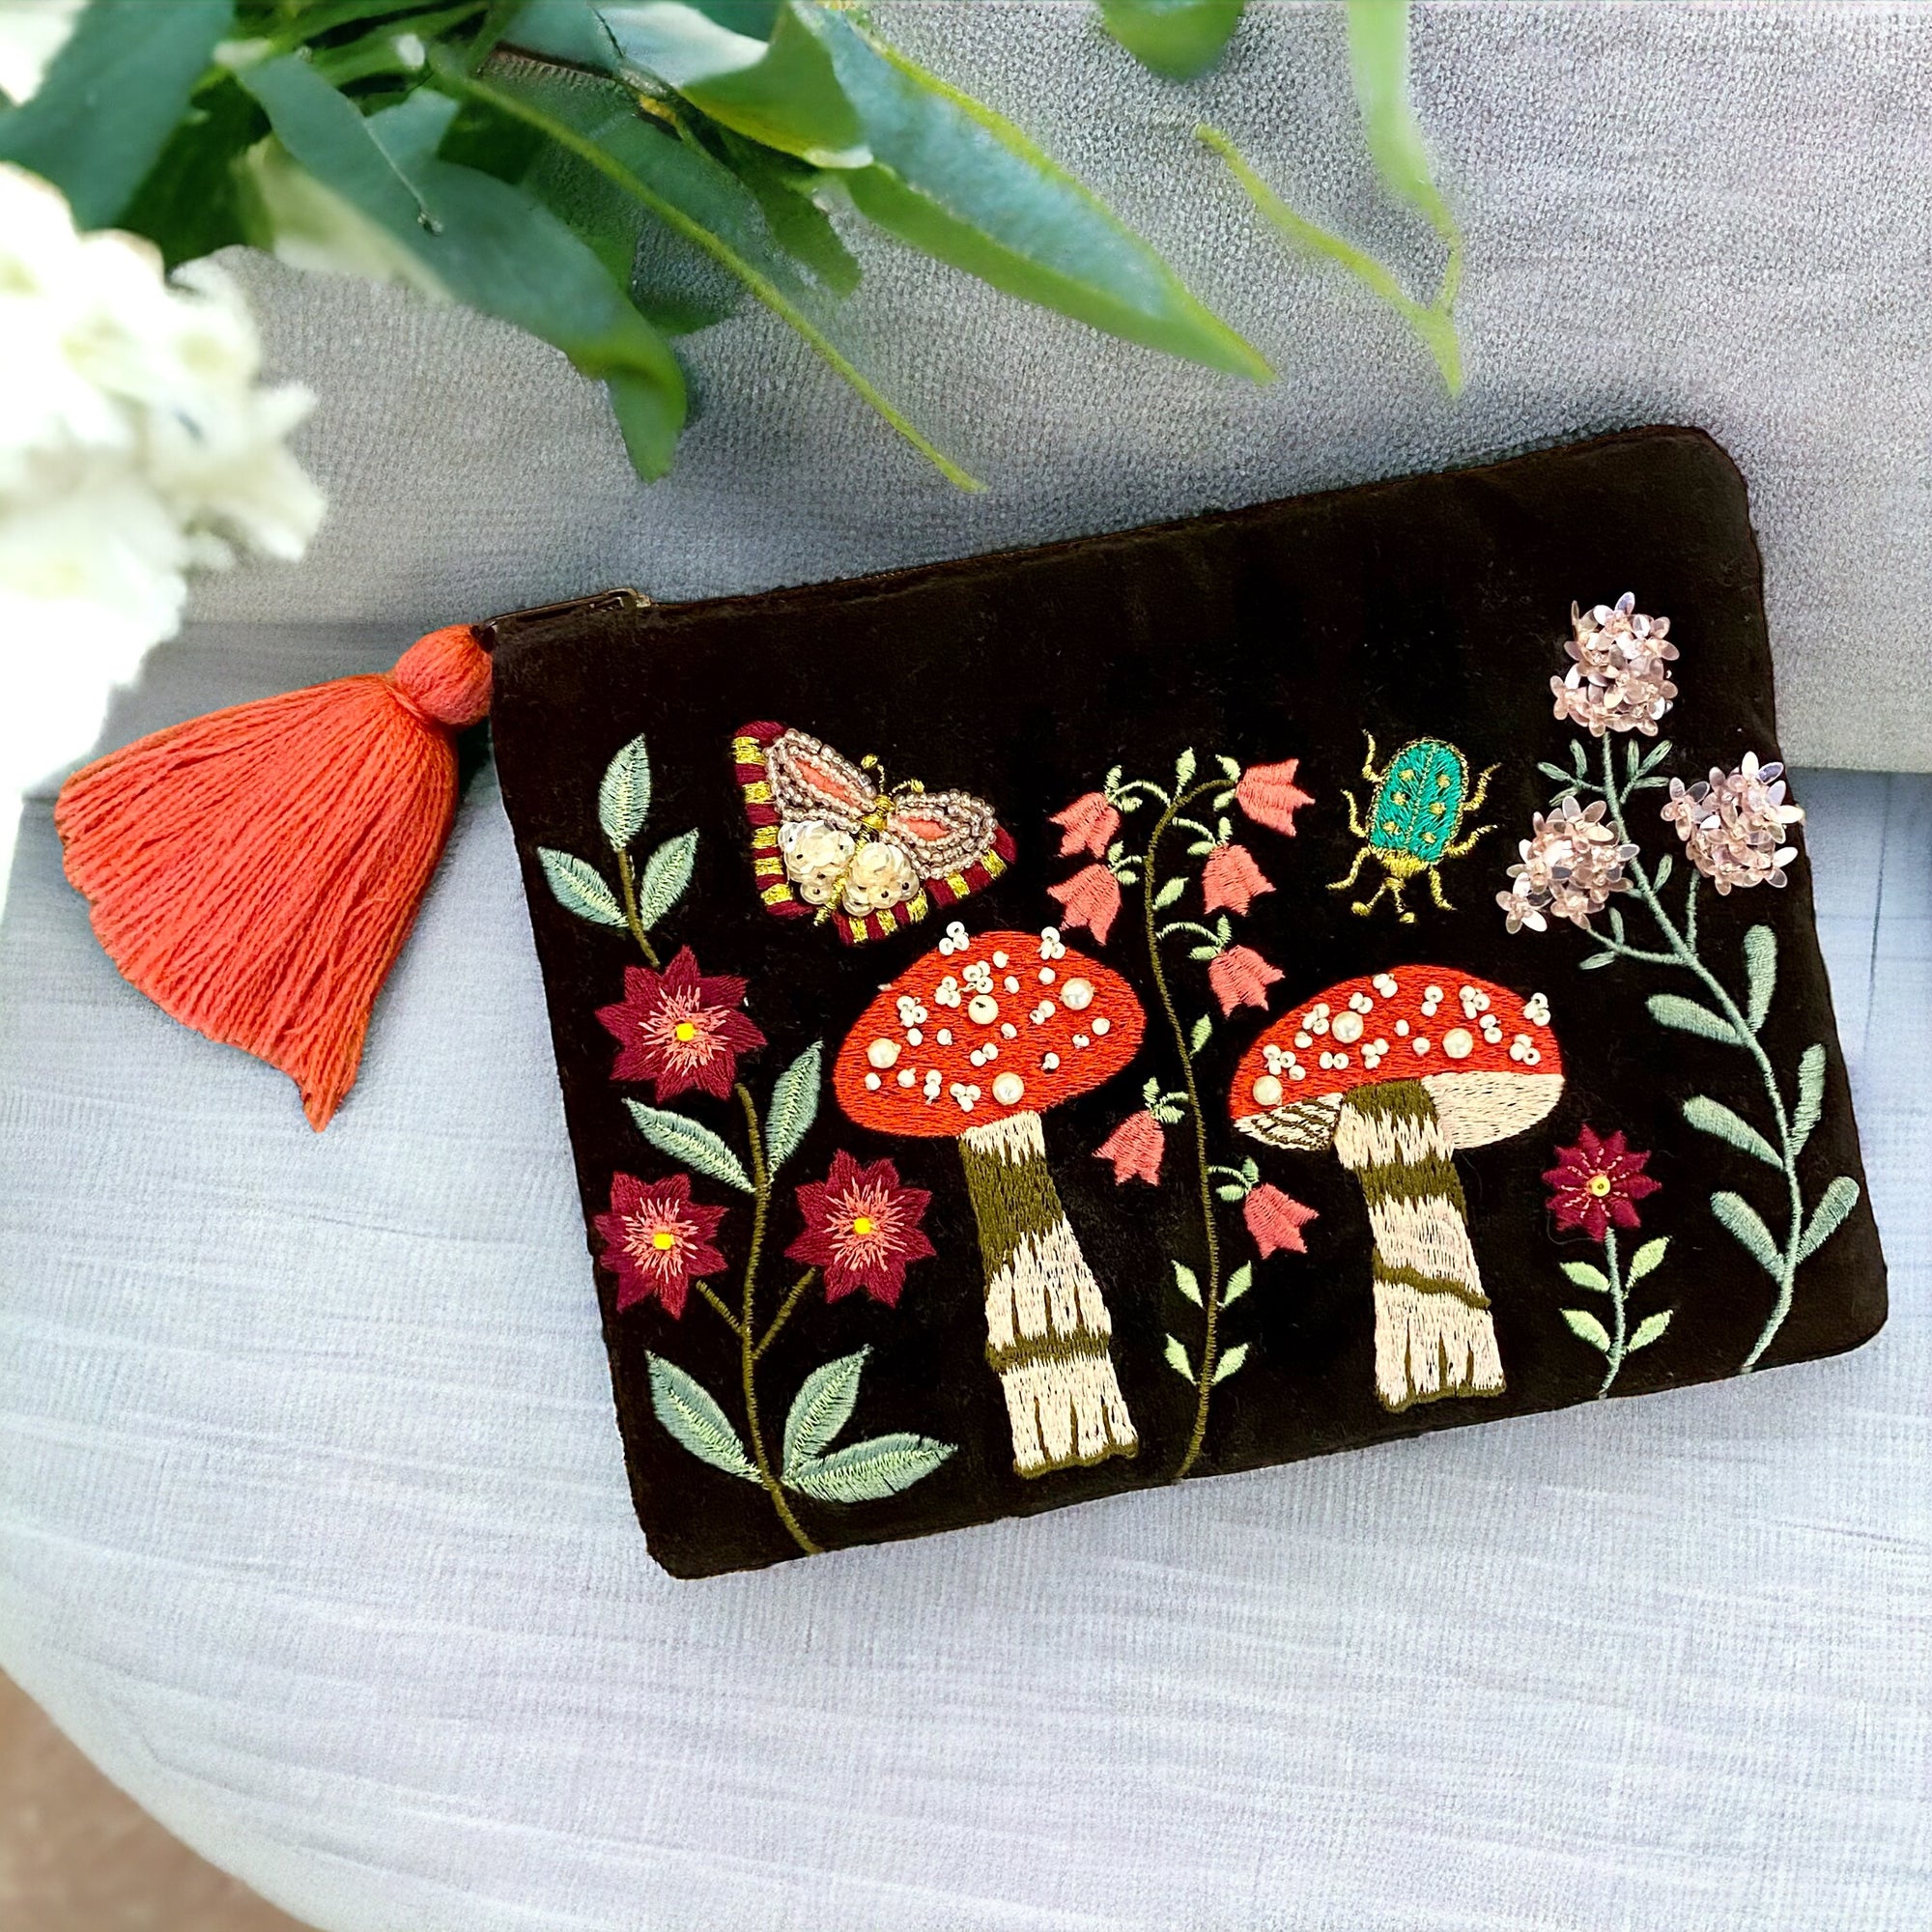 The Woodland Mushrooms & Flowers on Black Cotton Velvet Zipped Pouch